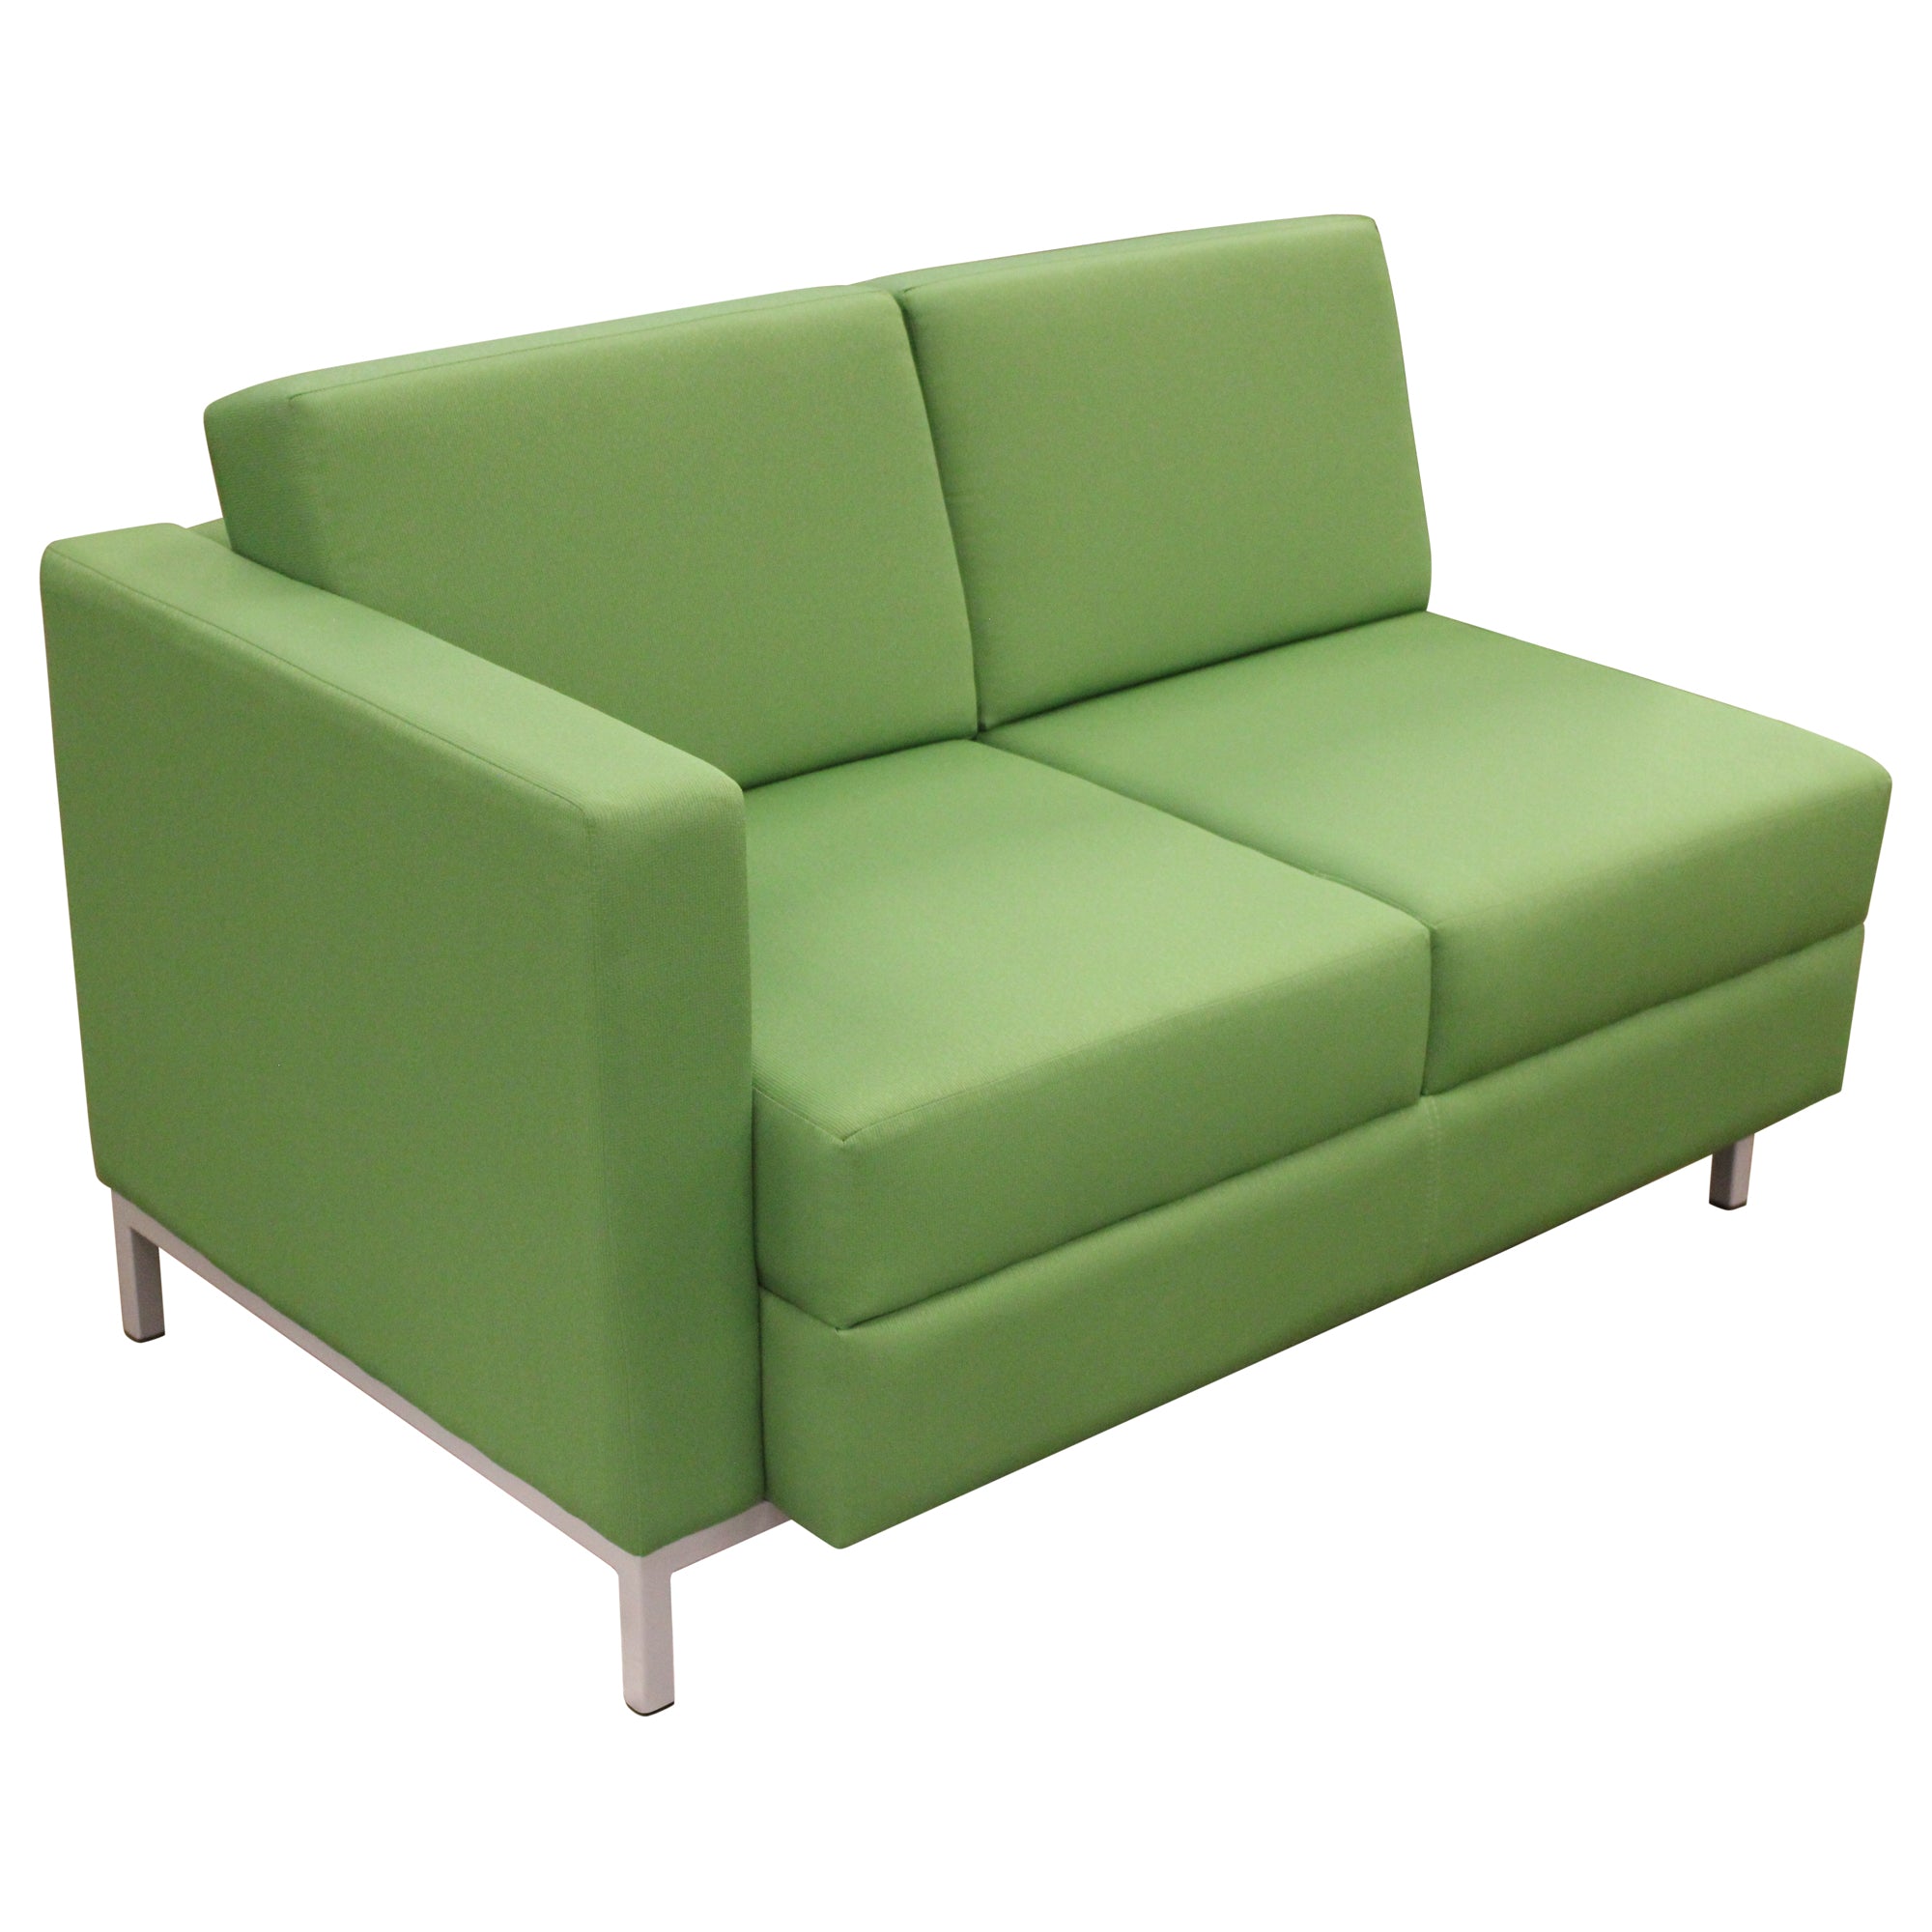 Global Citi Square 2-Seat Sofa, Green - Preowned